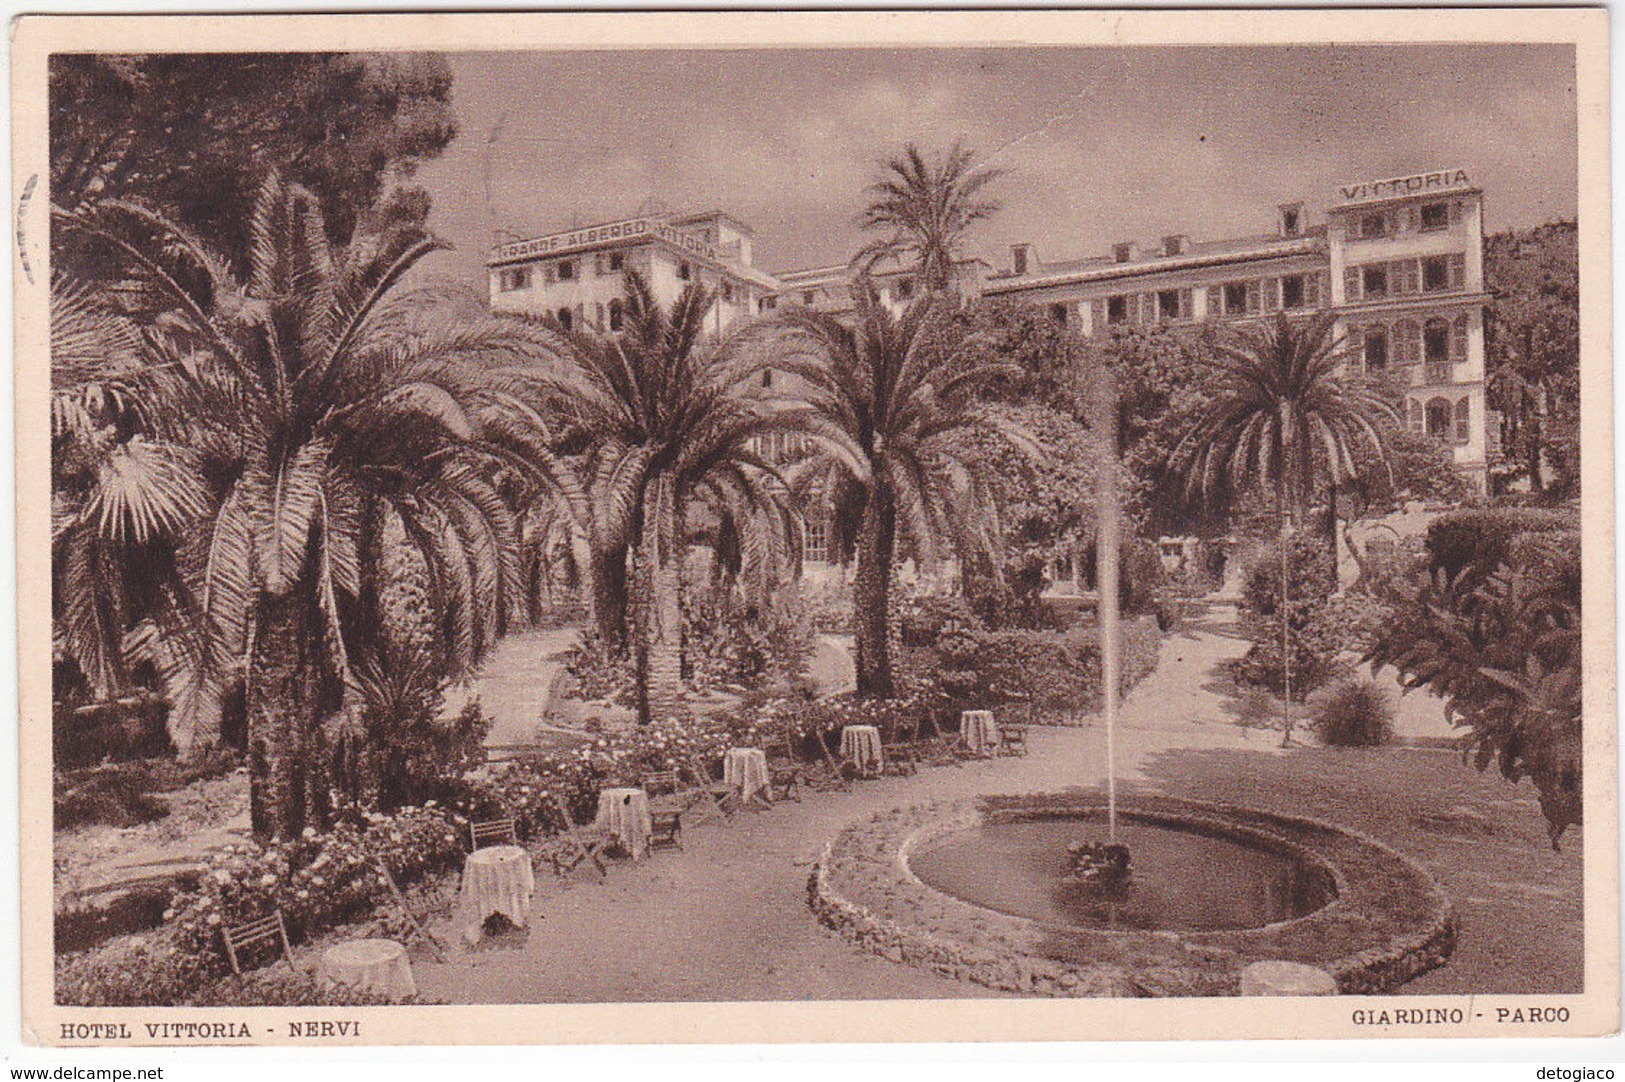 NERVI - GENOVA - HOTEL VITTORIA - GIARDINO - PARCO - VIAGG. 1968 -16634- - Genova (Genua)